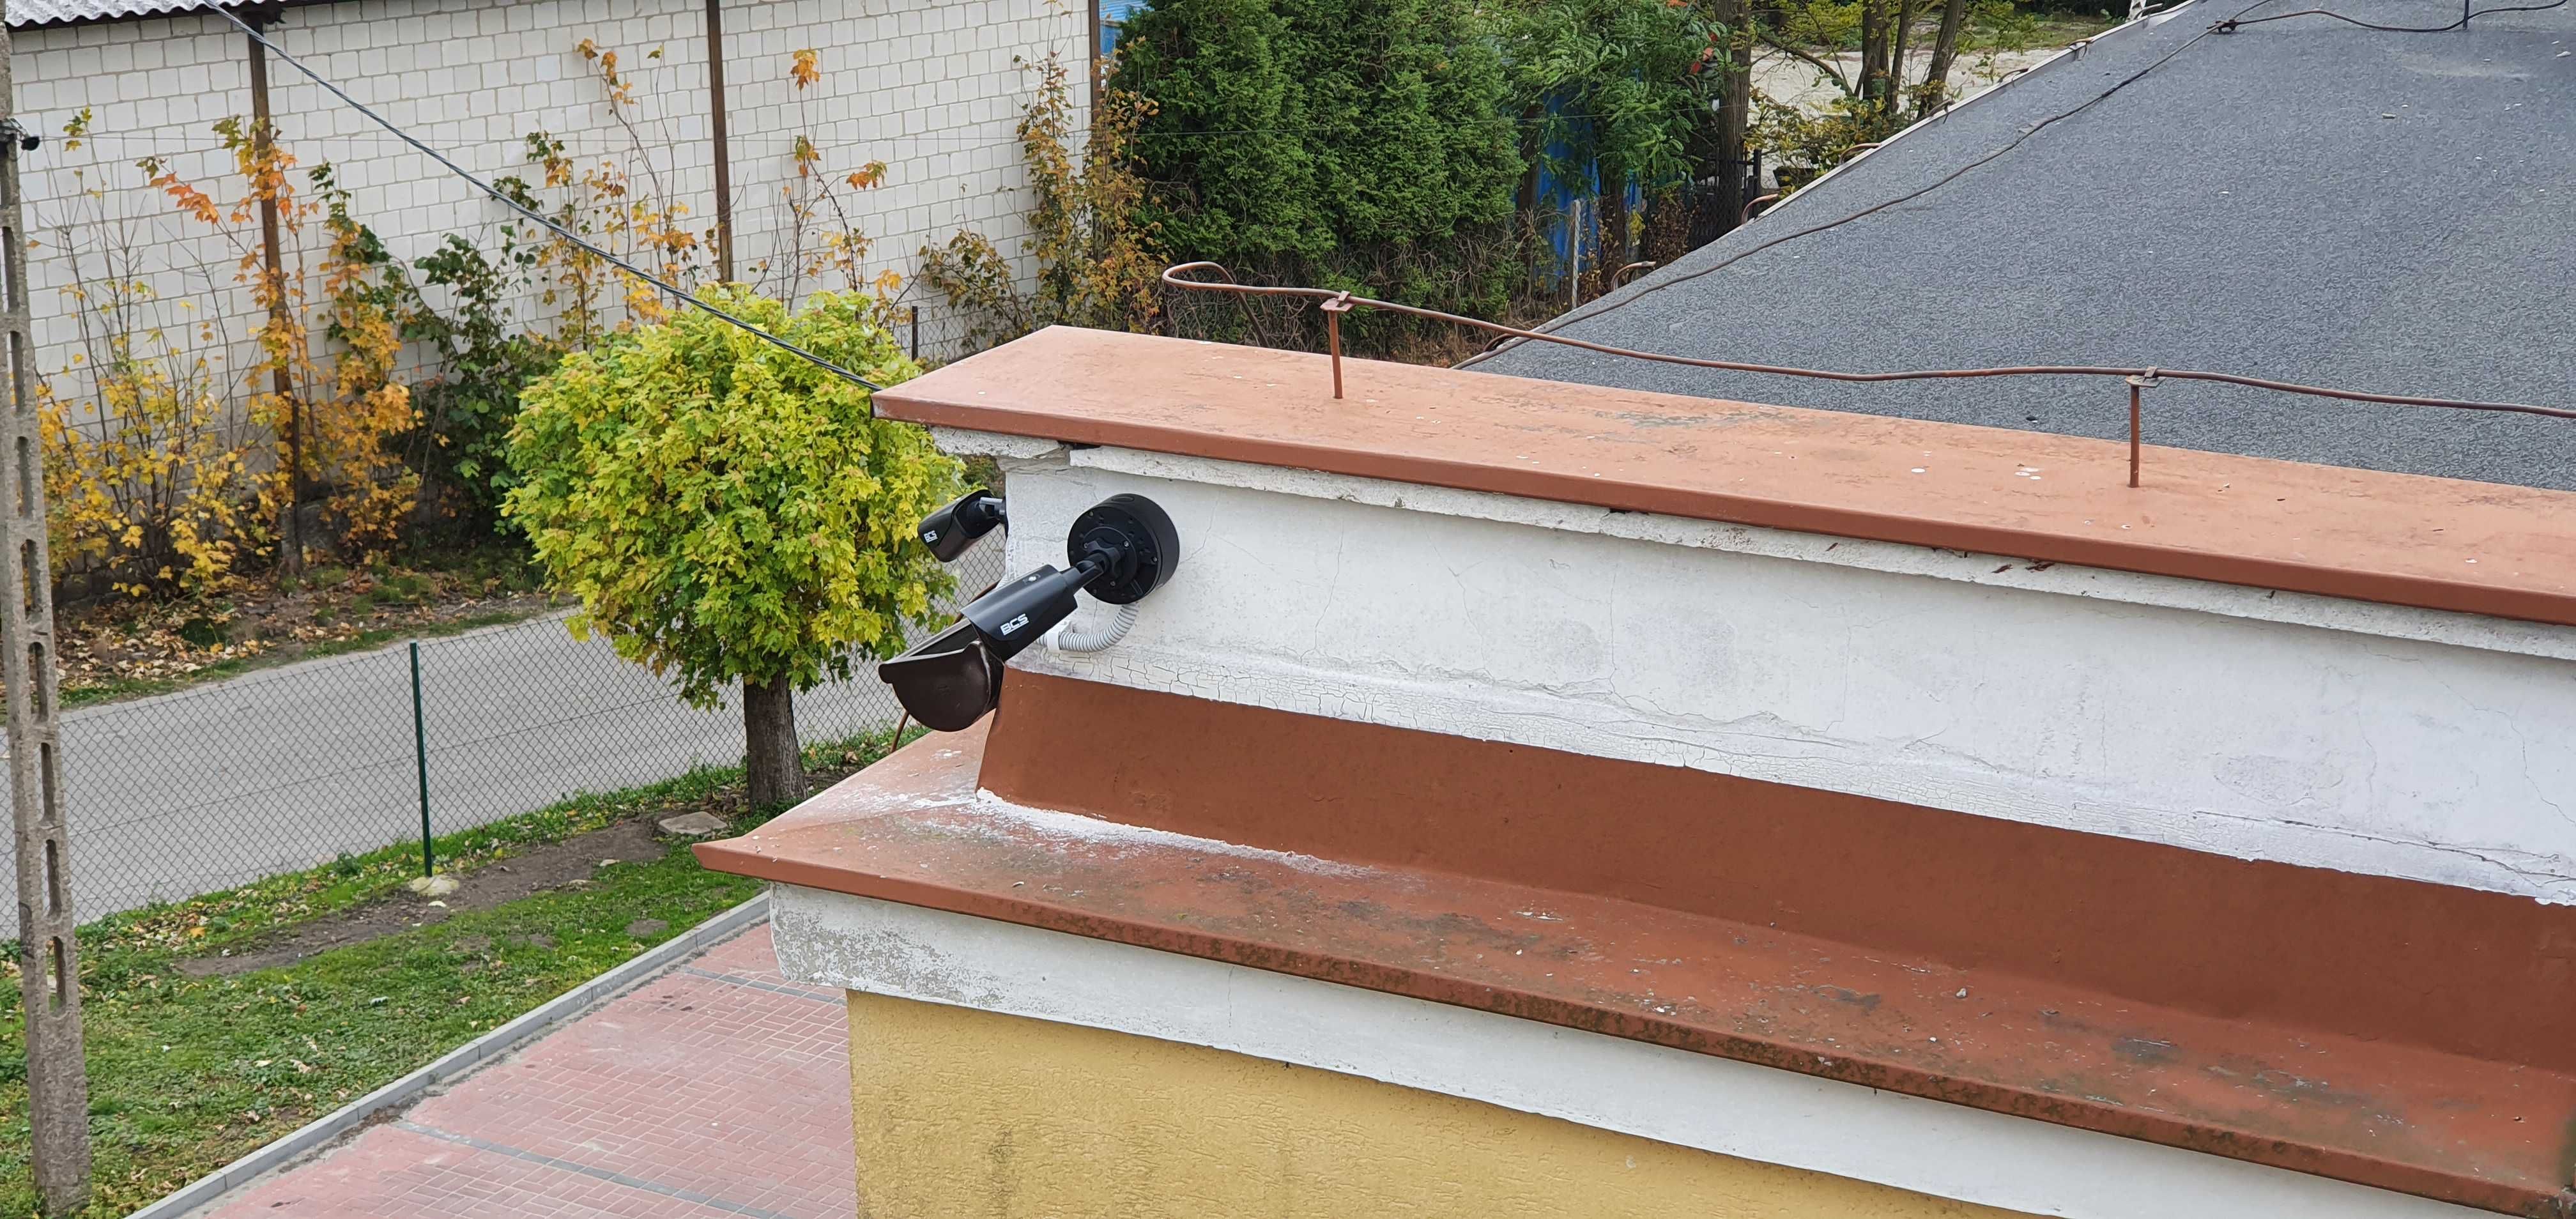 Montaż Monitoringu CCTV - Serwis / Modernizacja Sieci / Kamer - dojazd